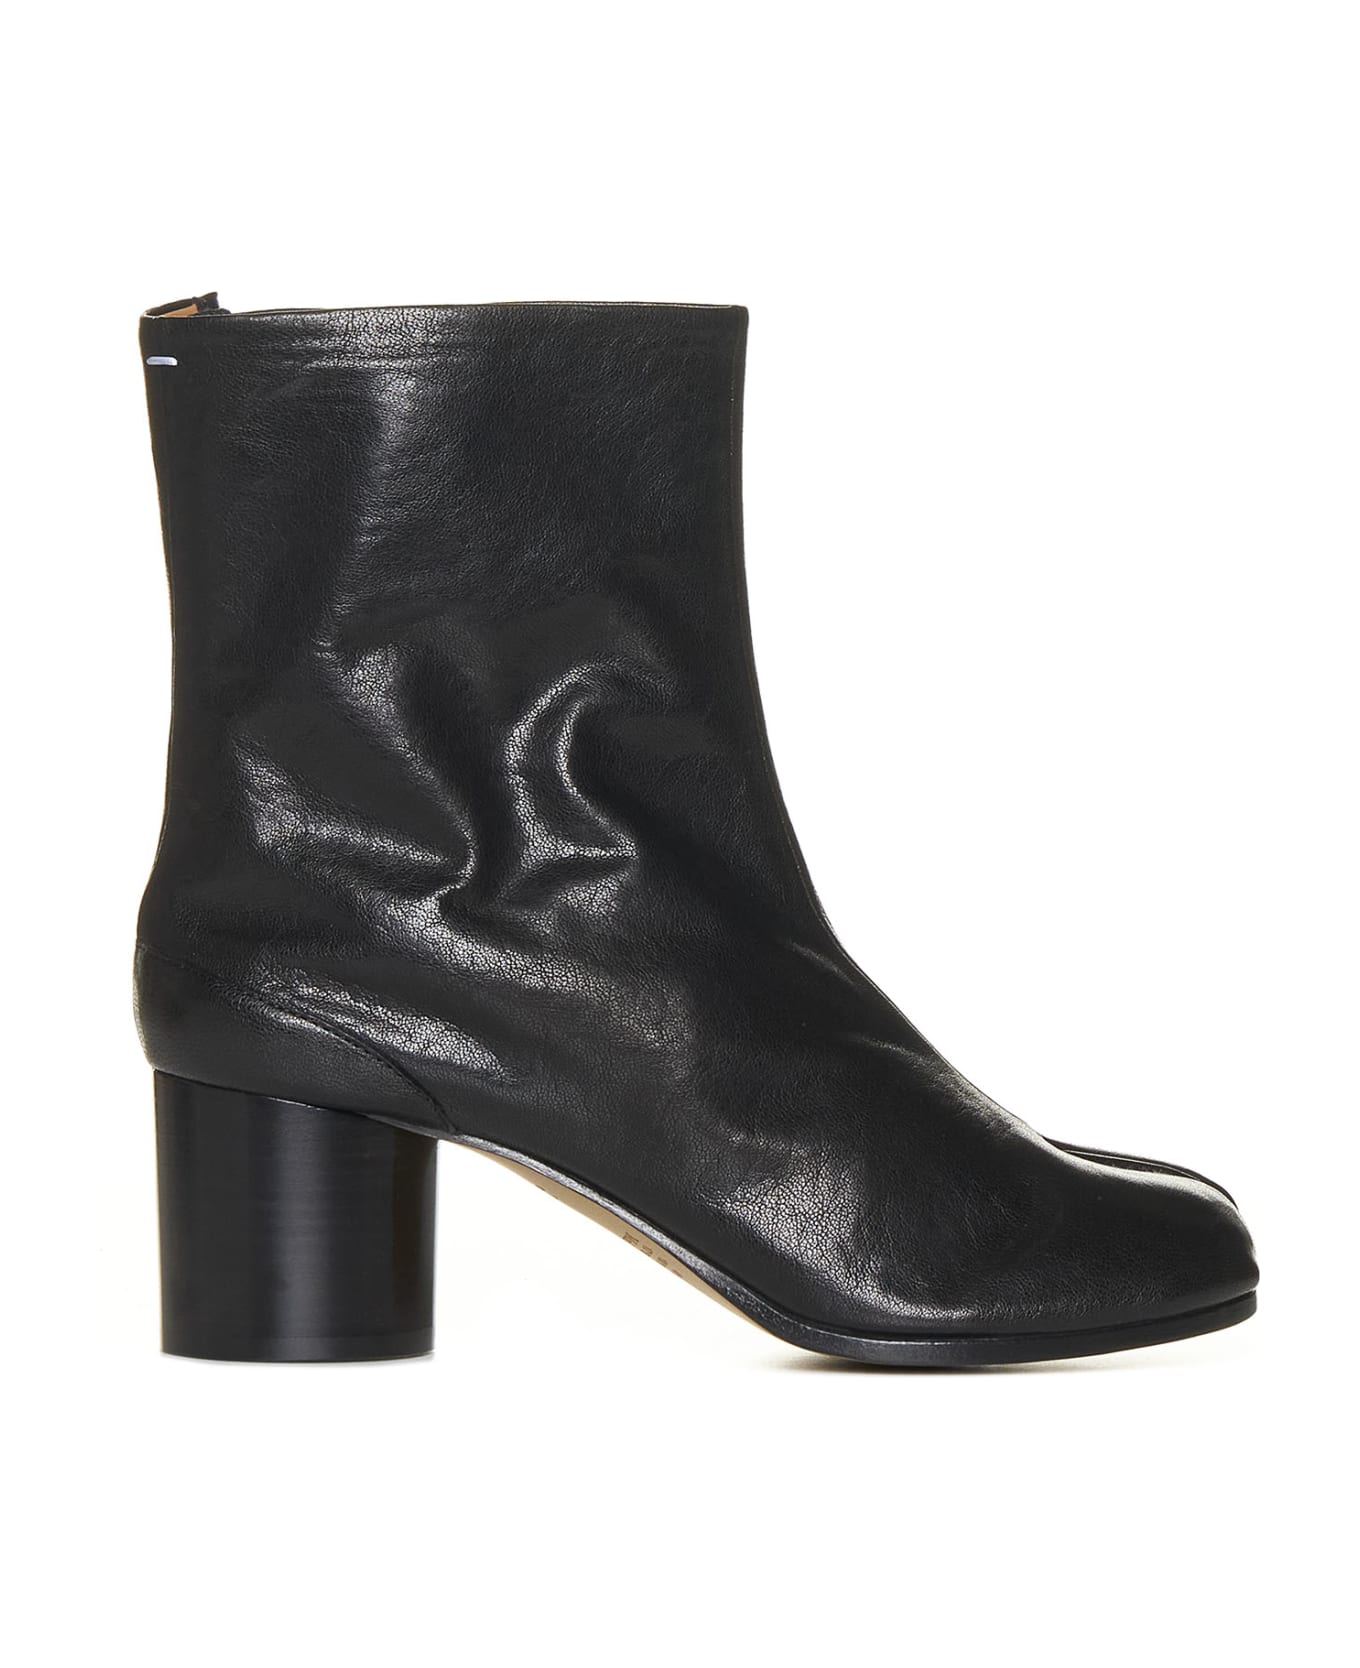 Maison Margiela Tabi Leather Ankle Boots - Black ブーツ